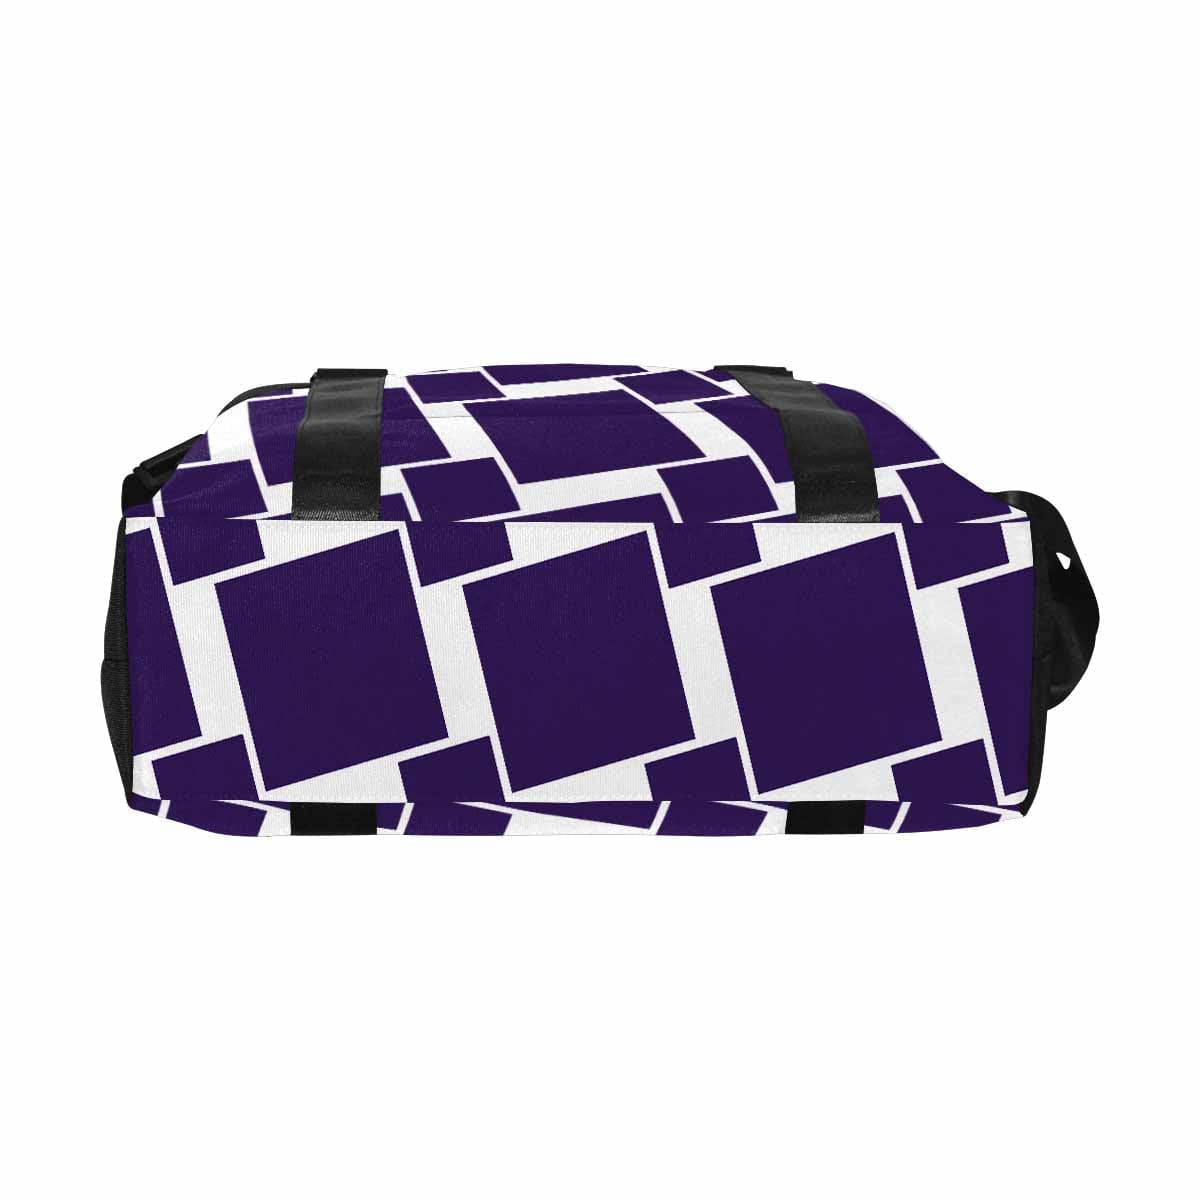 Duffle Bag - Large Capacity - Indigo Purple - Bags | Travel Bags | Canvas Carry